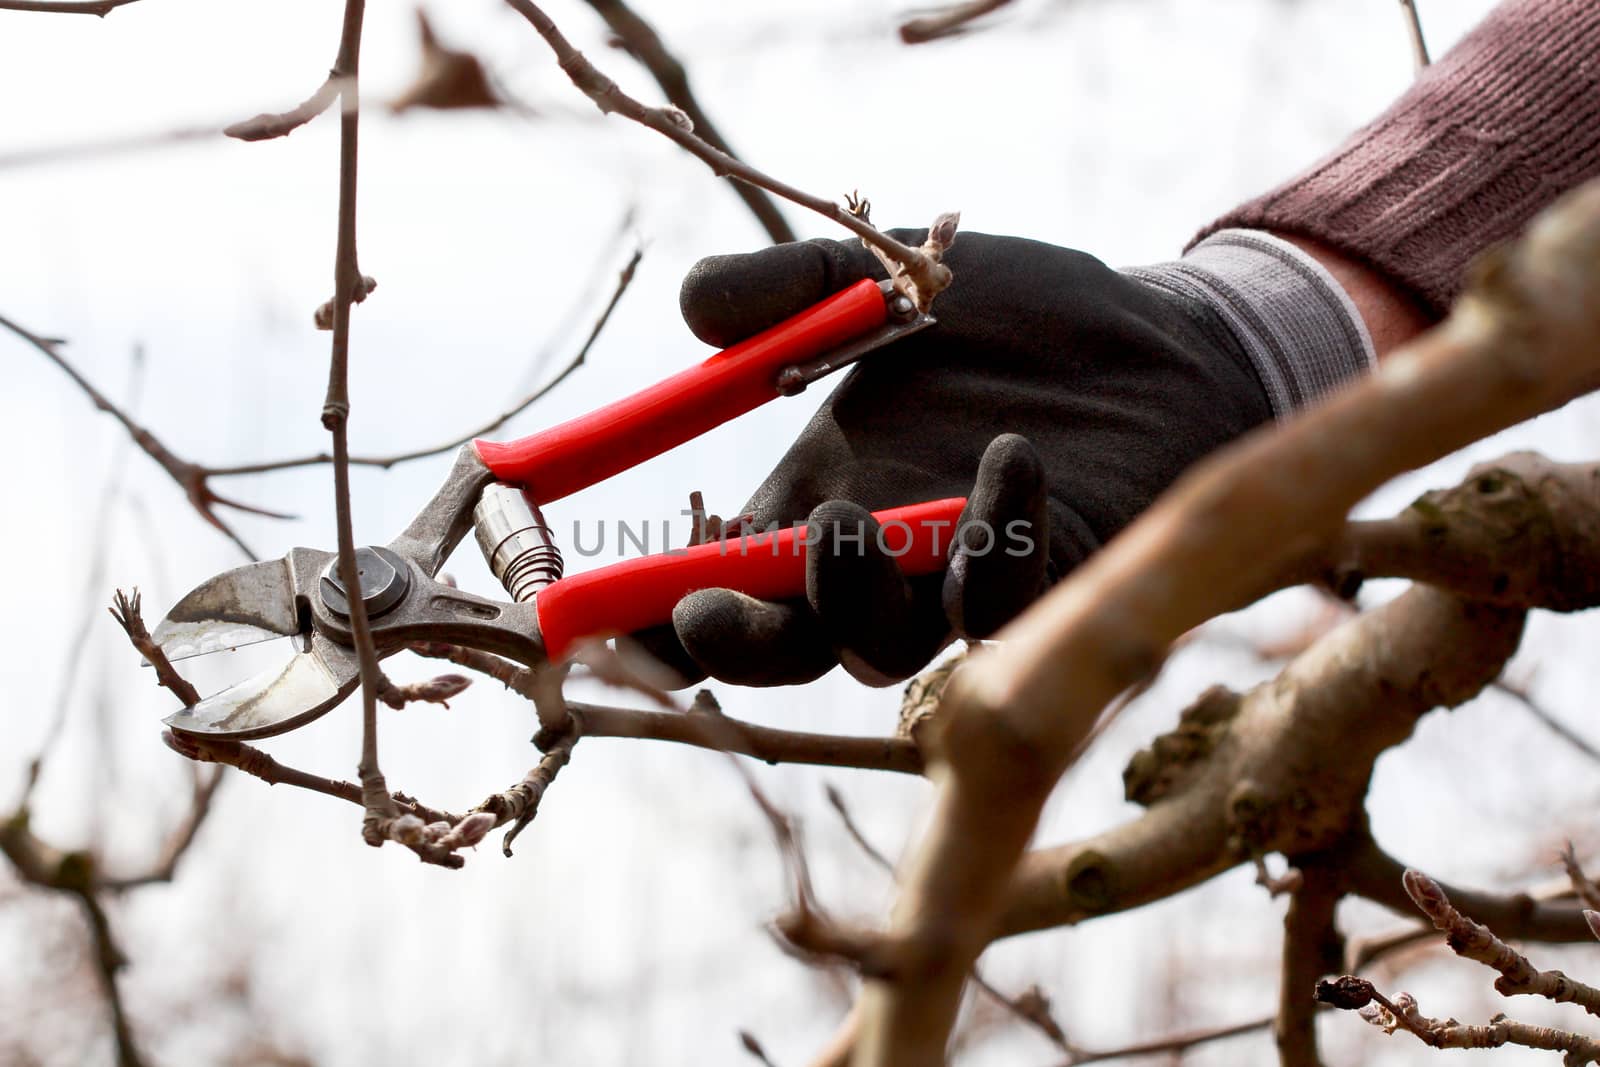 Pruning apple tree by nehru